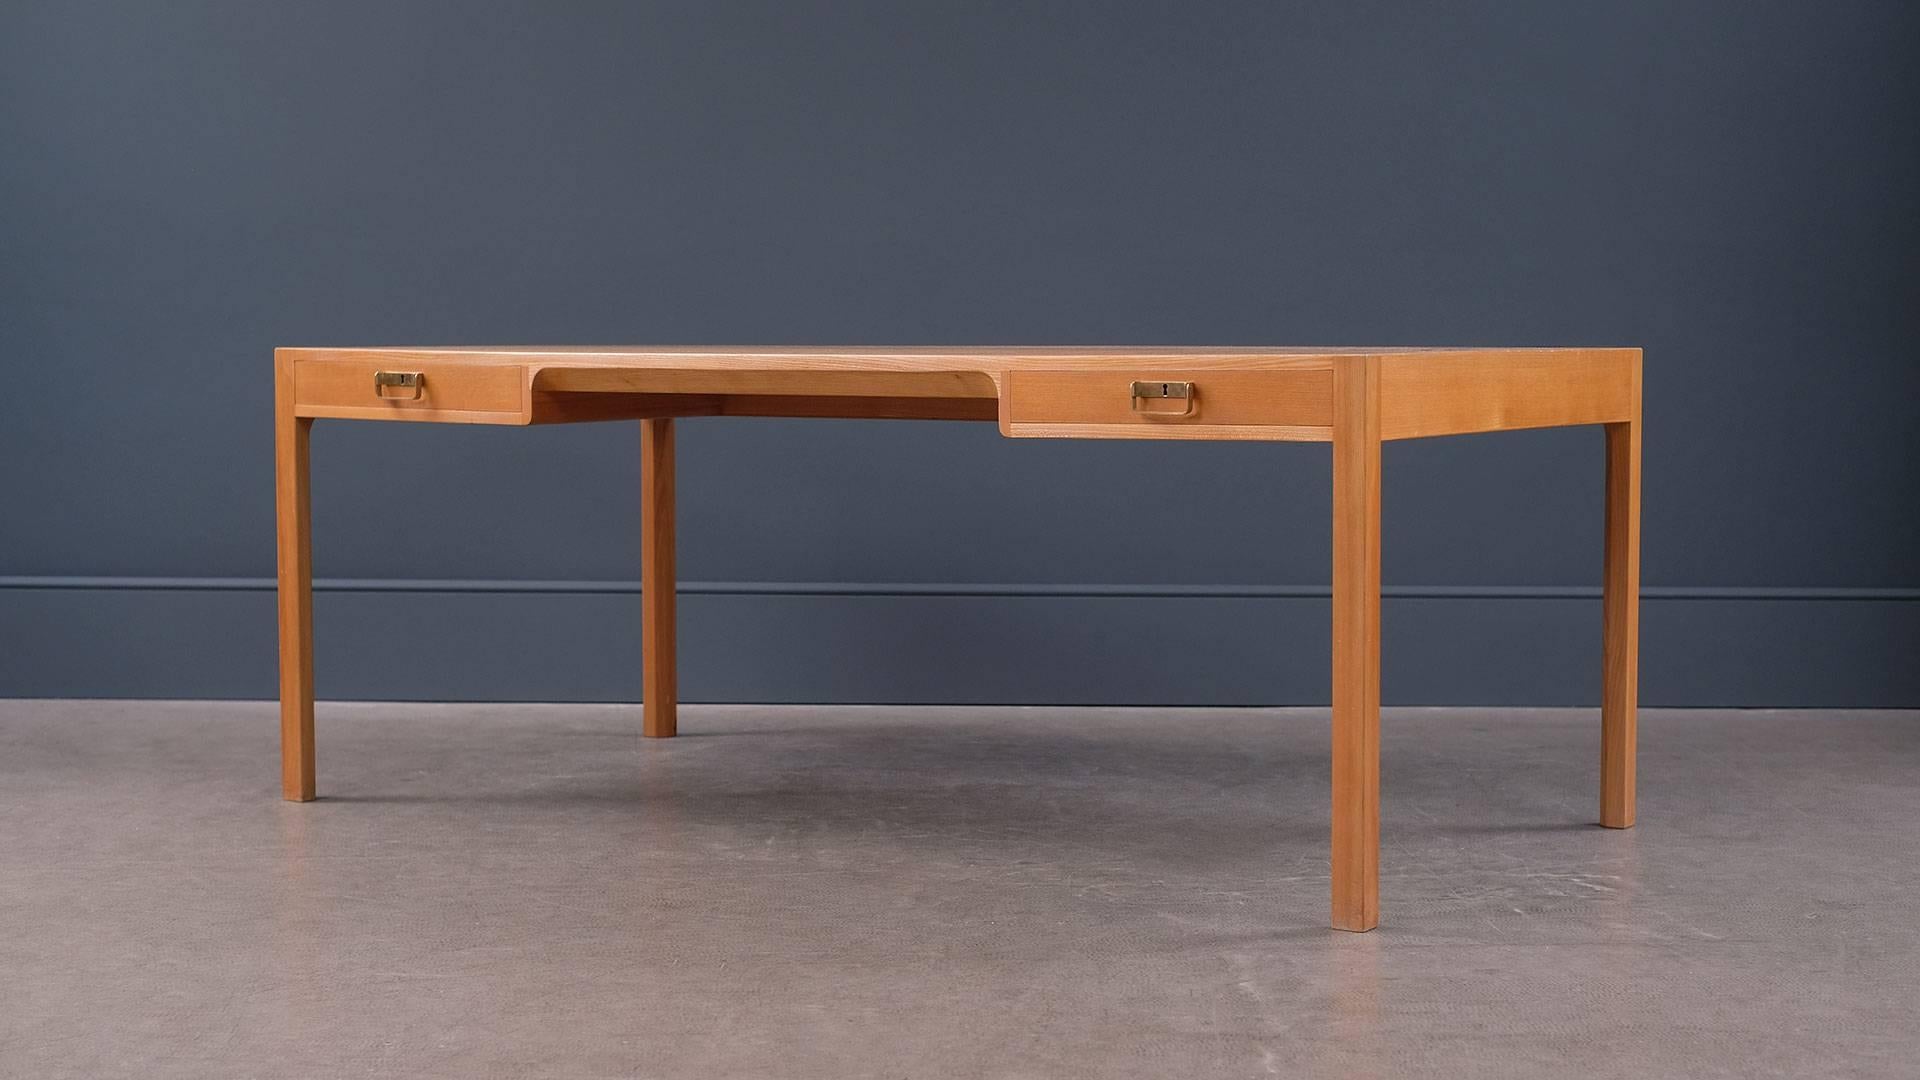 Ultra elegant and high quality large desk in stunning elmwood with brass handles designed by Bernt Petersen for C. N, Jørgensen Møbelsnedkeri, 1964 Denmark.